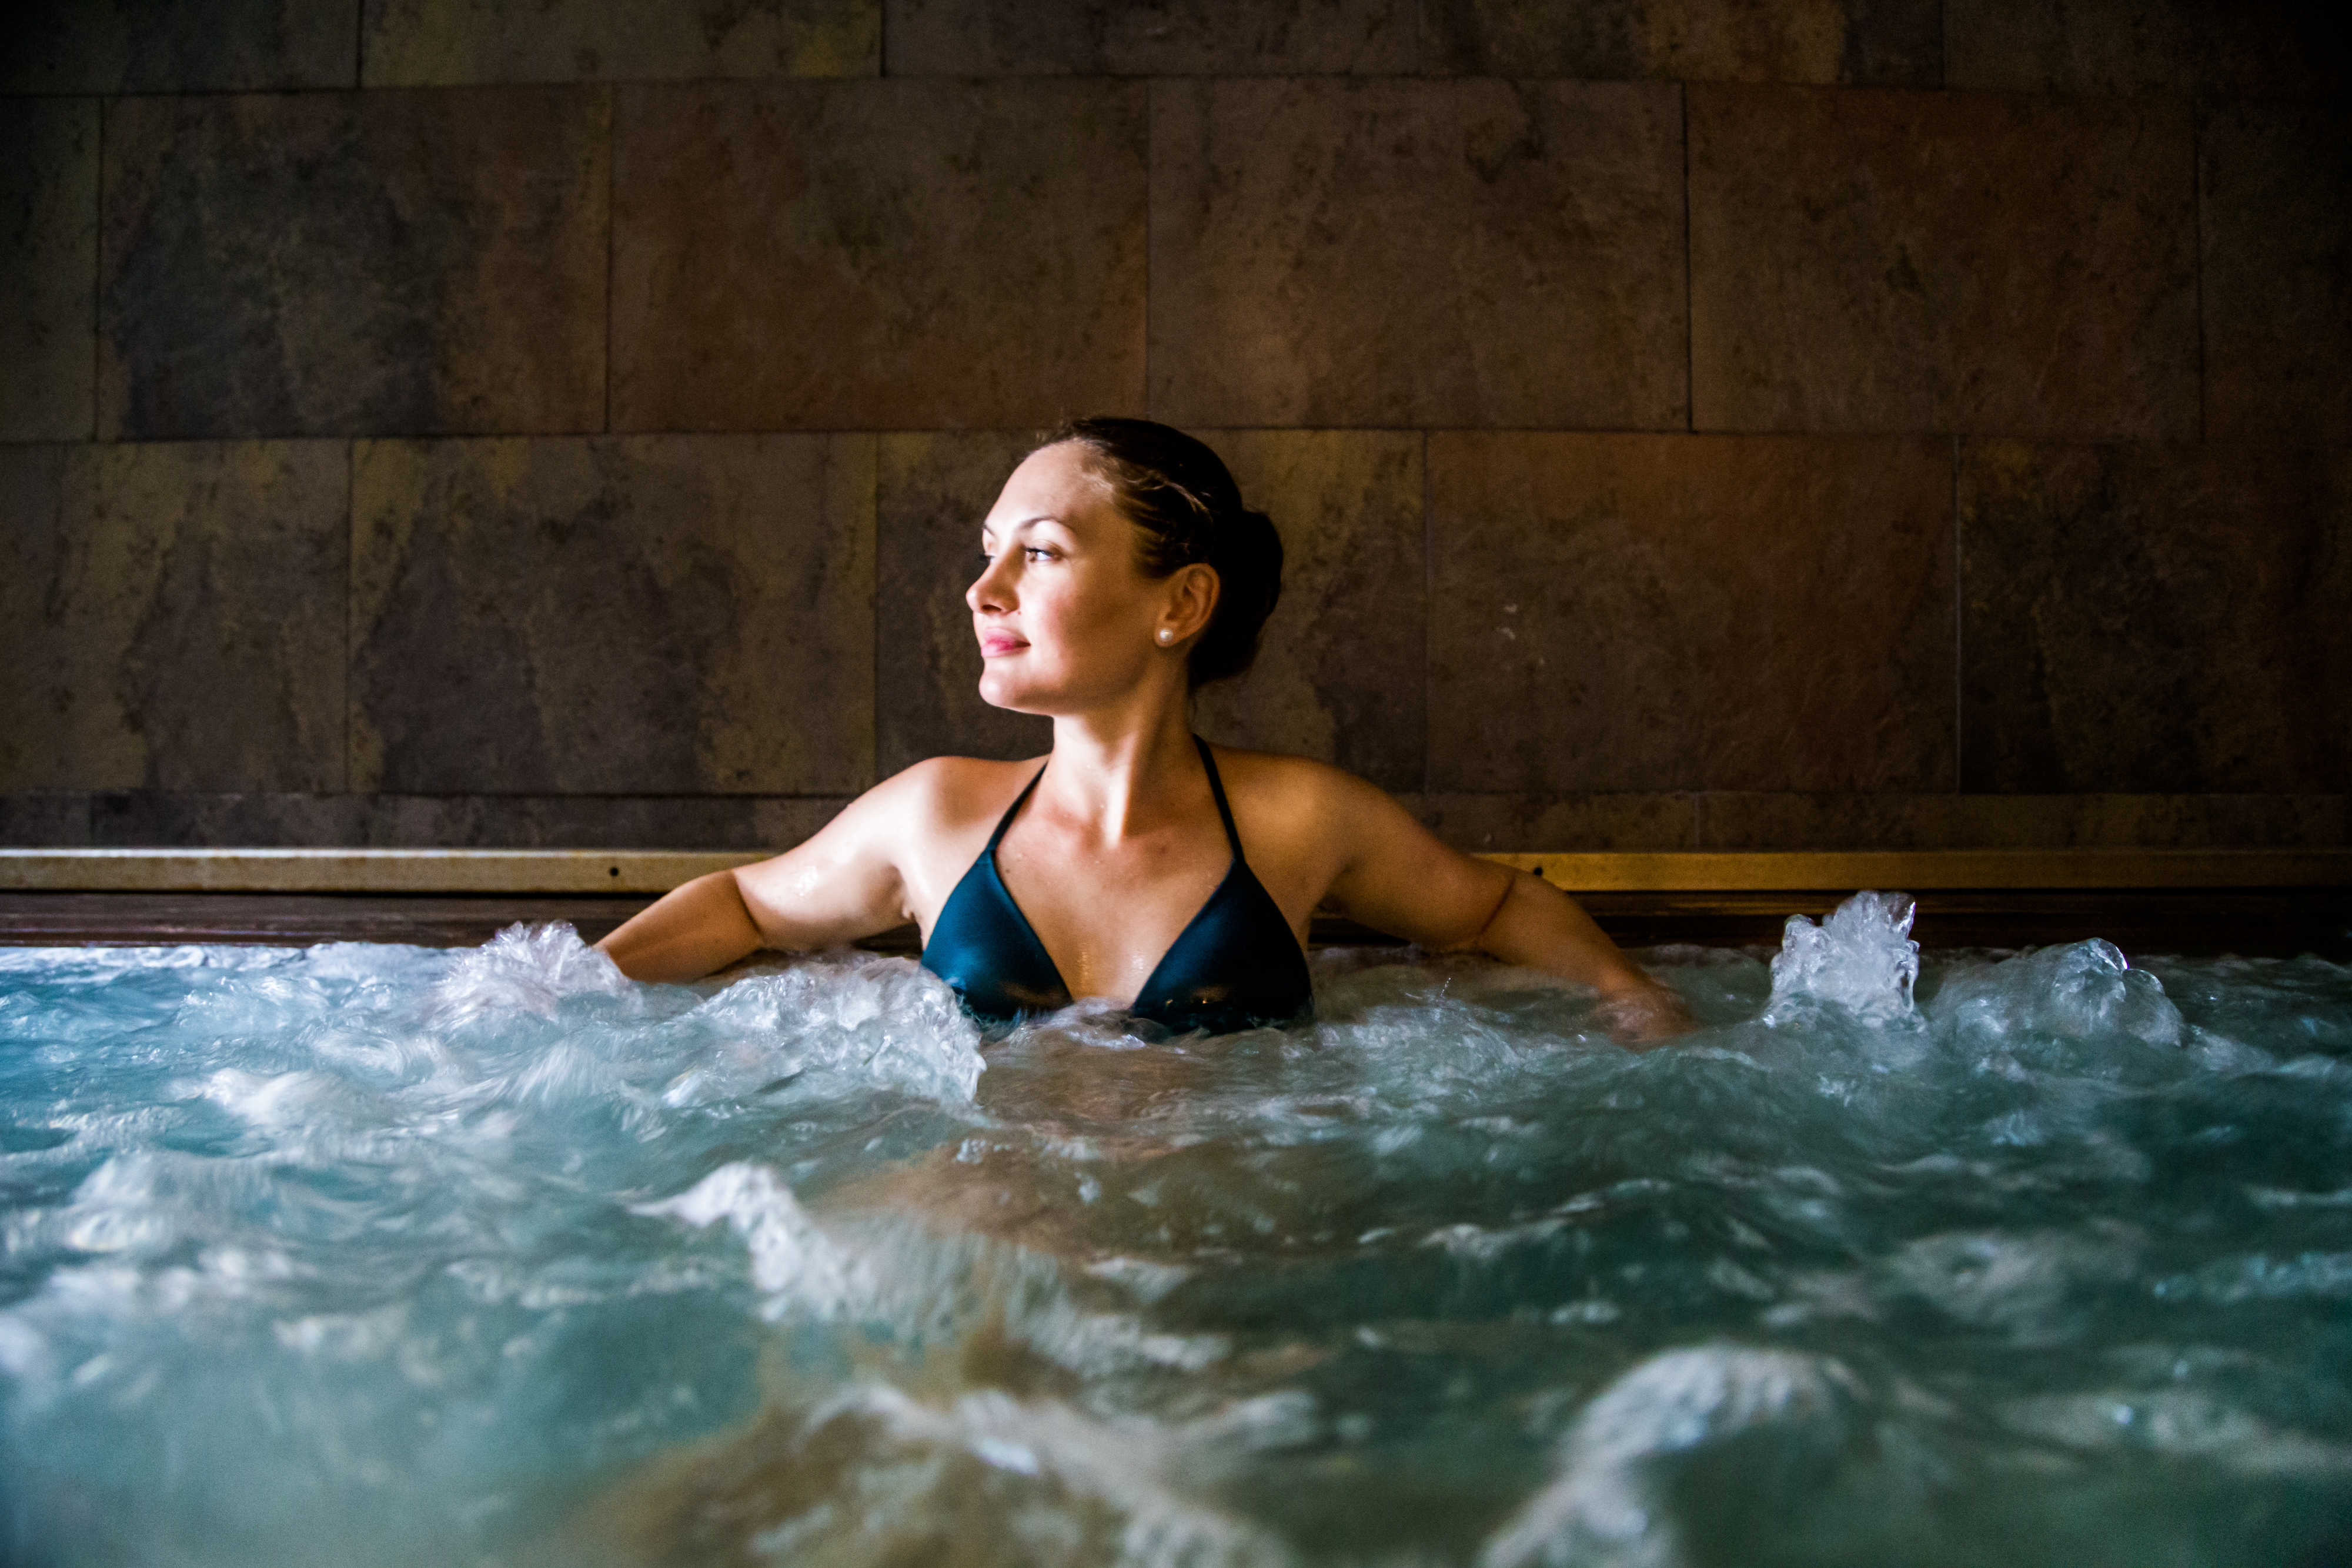 Person in a swimwear relaxing in bubbling water, gazing away thoughtfully